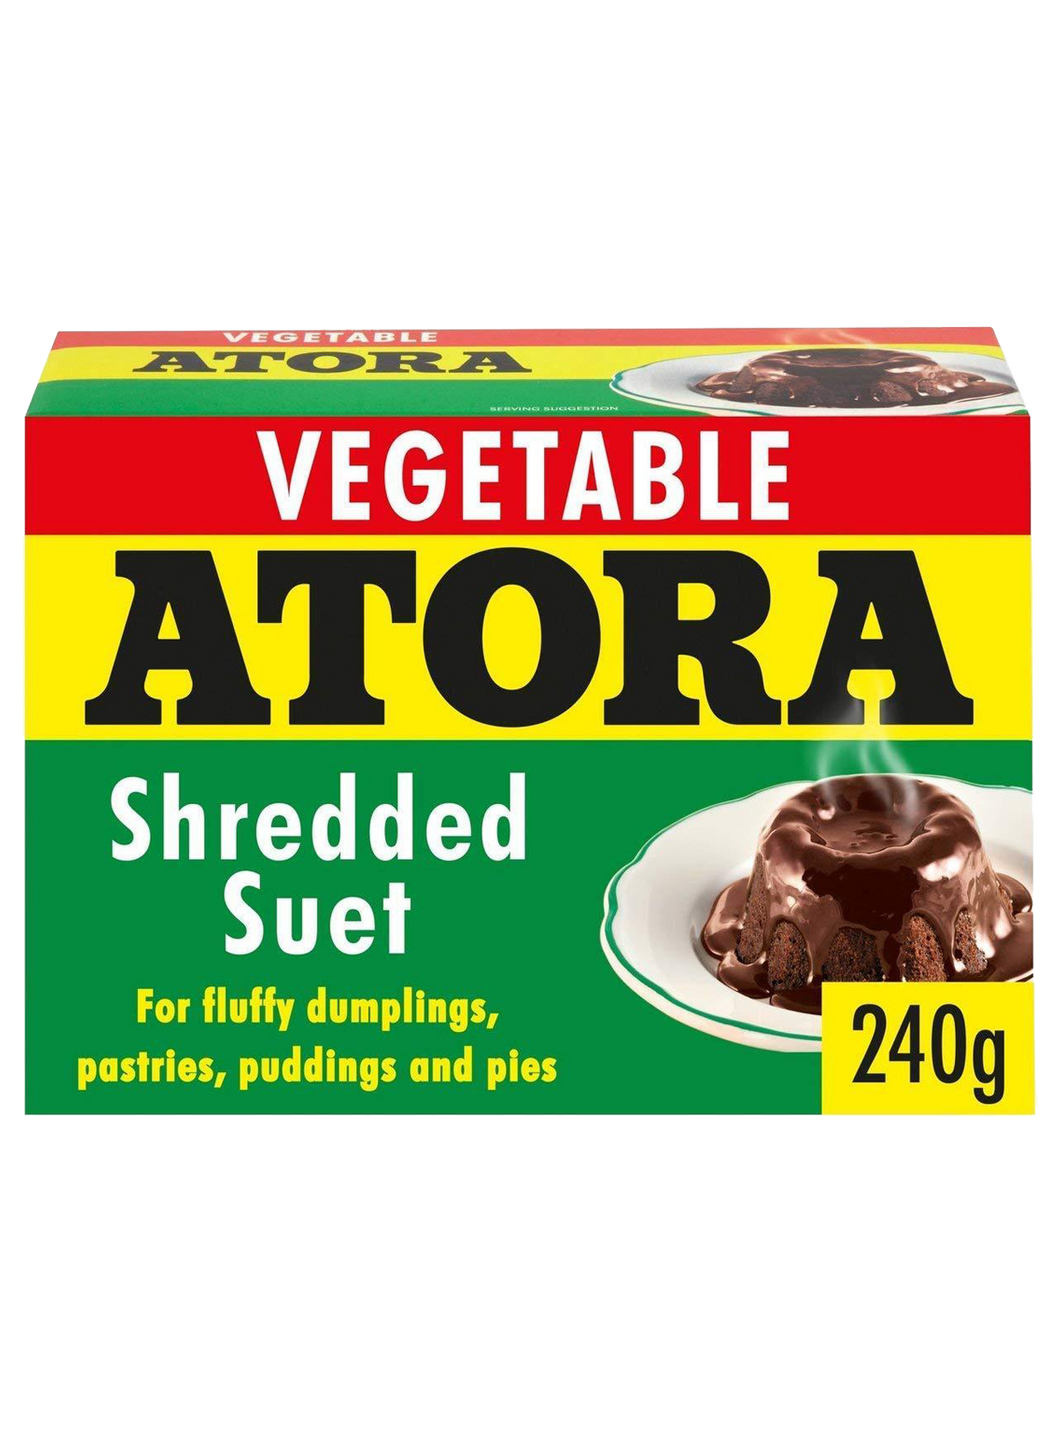 ATORA Vegetable Shredded Suet 240g